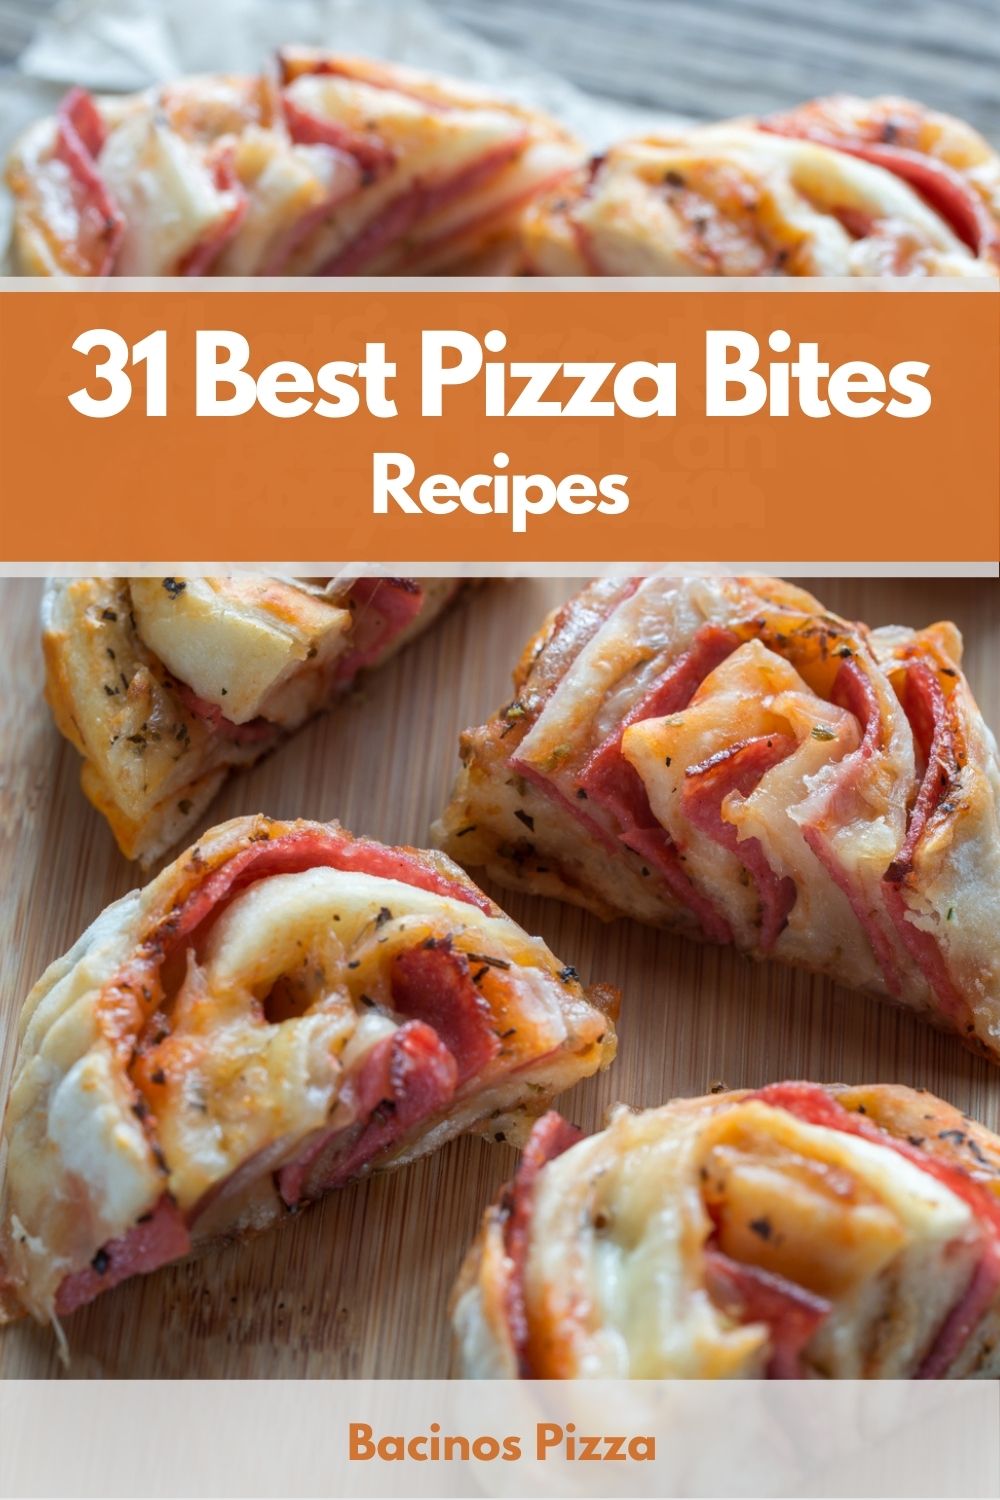 31 Best Pizza Bites Recipes pin